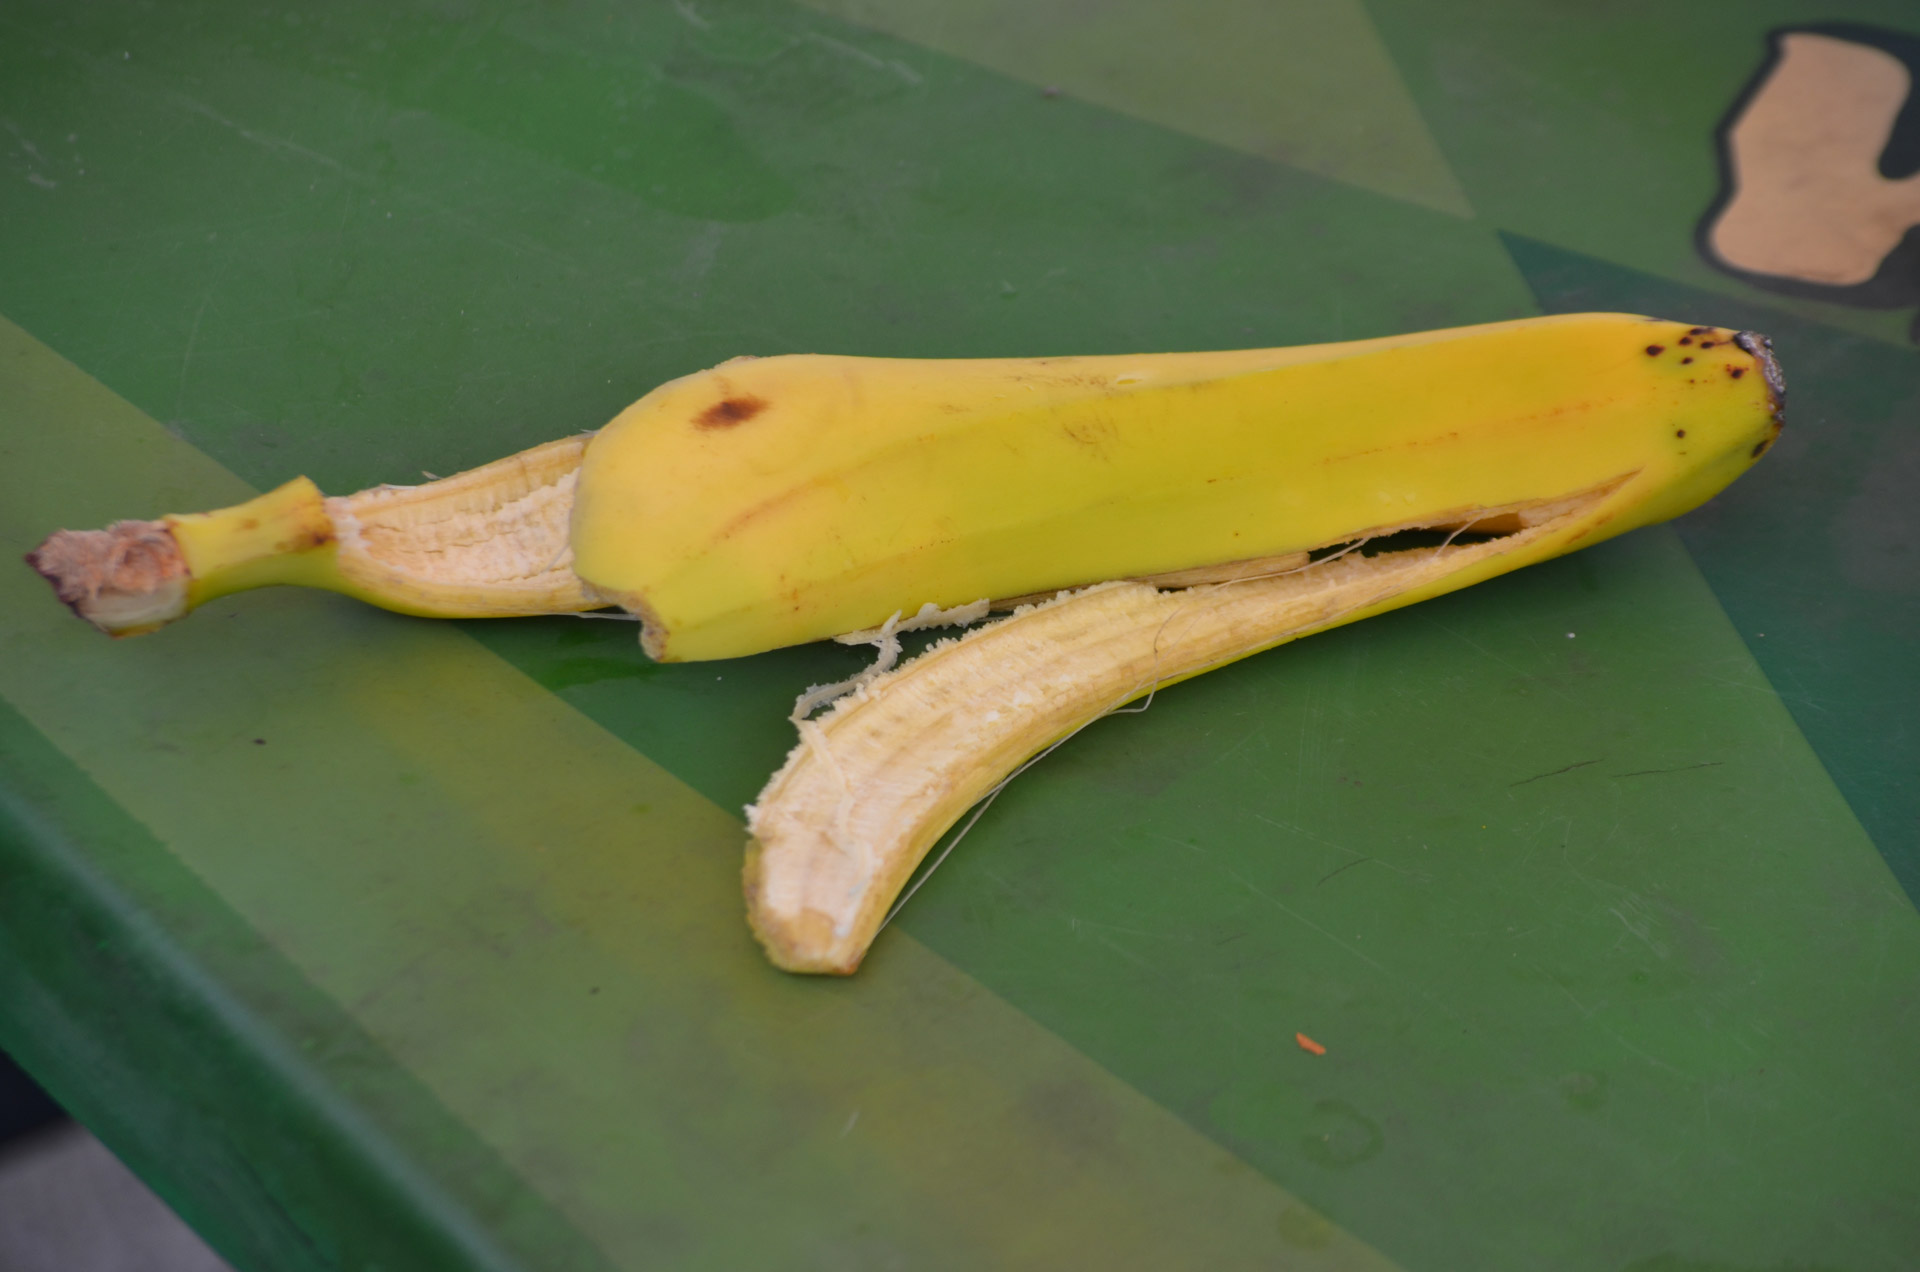 Download Banana Fruit Peel Free Photo.